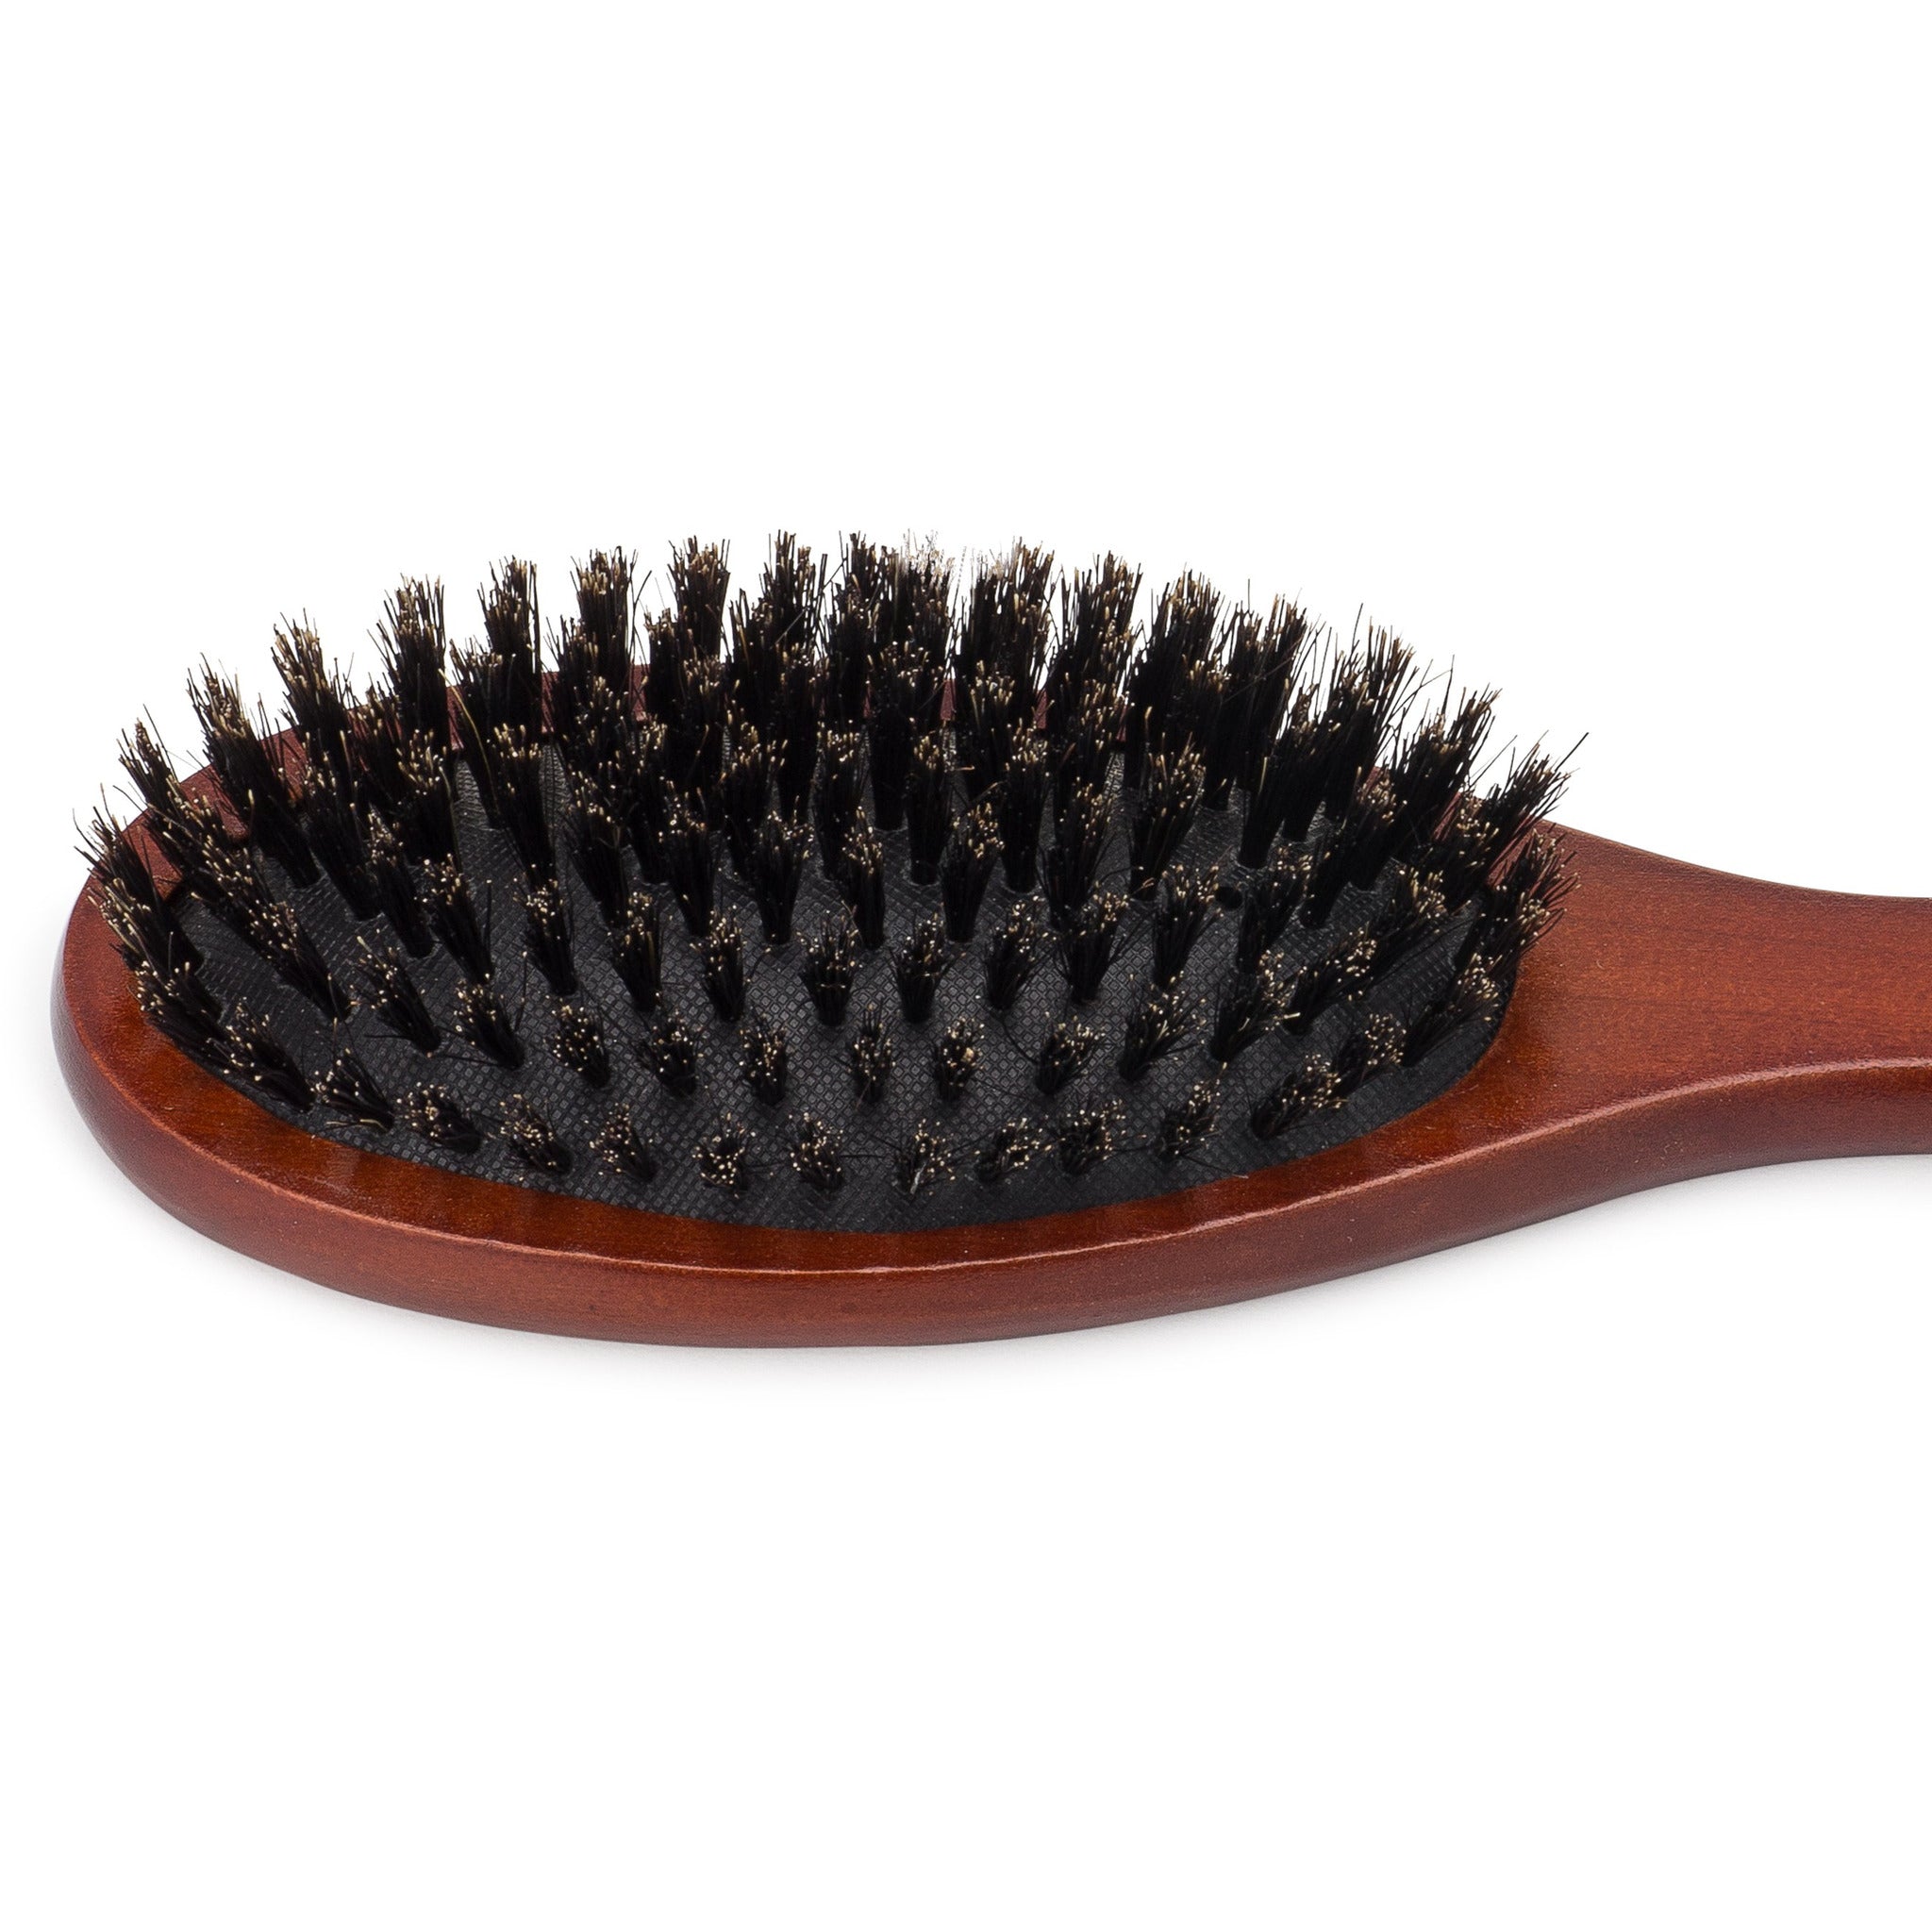 GranNaturals Hair Brush Cleaner - Rake Design for Pick Cleaning &  Detangling Combs & Bristle Brushes - Durable Metal Wires, Ergonomic Wooden  Handle 